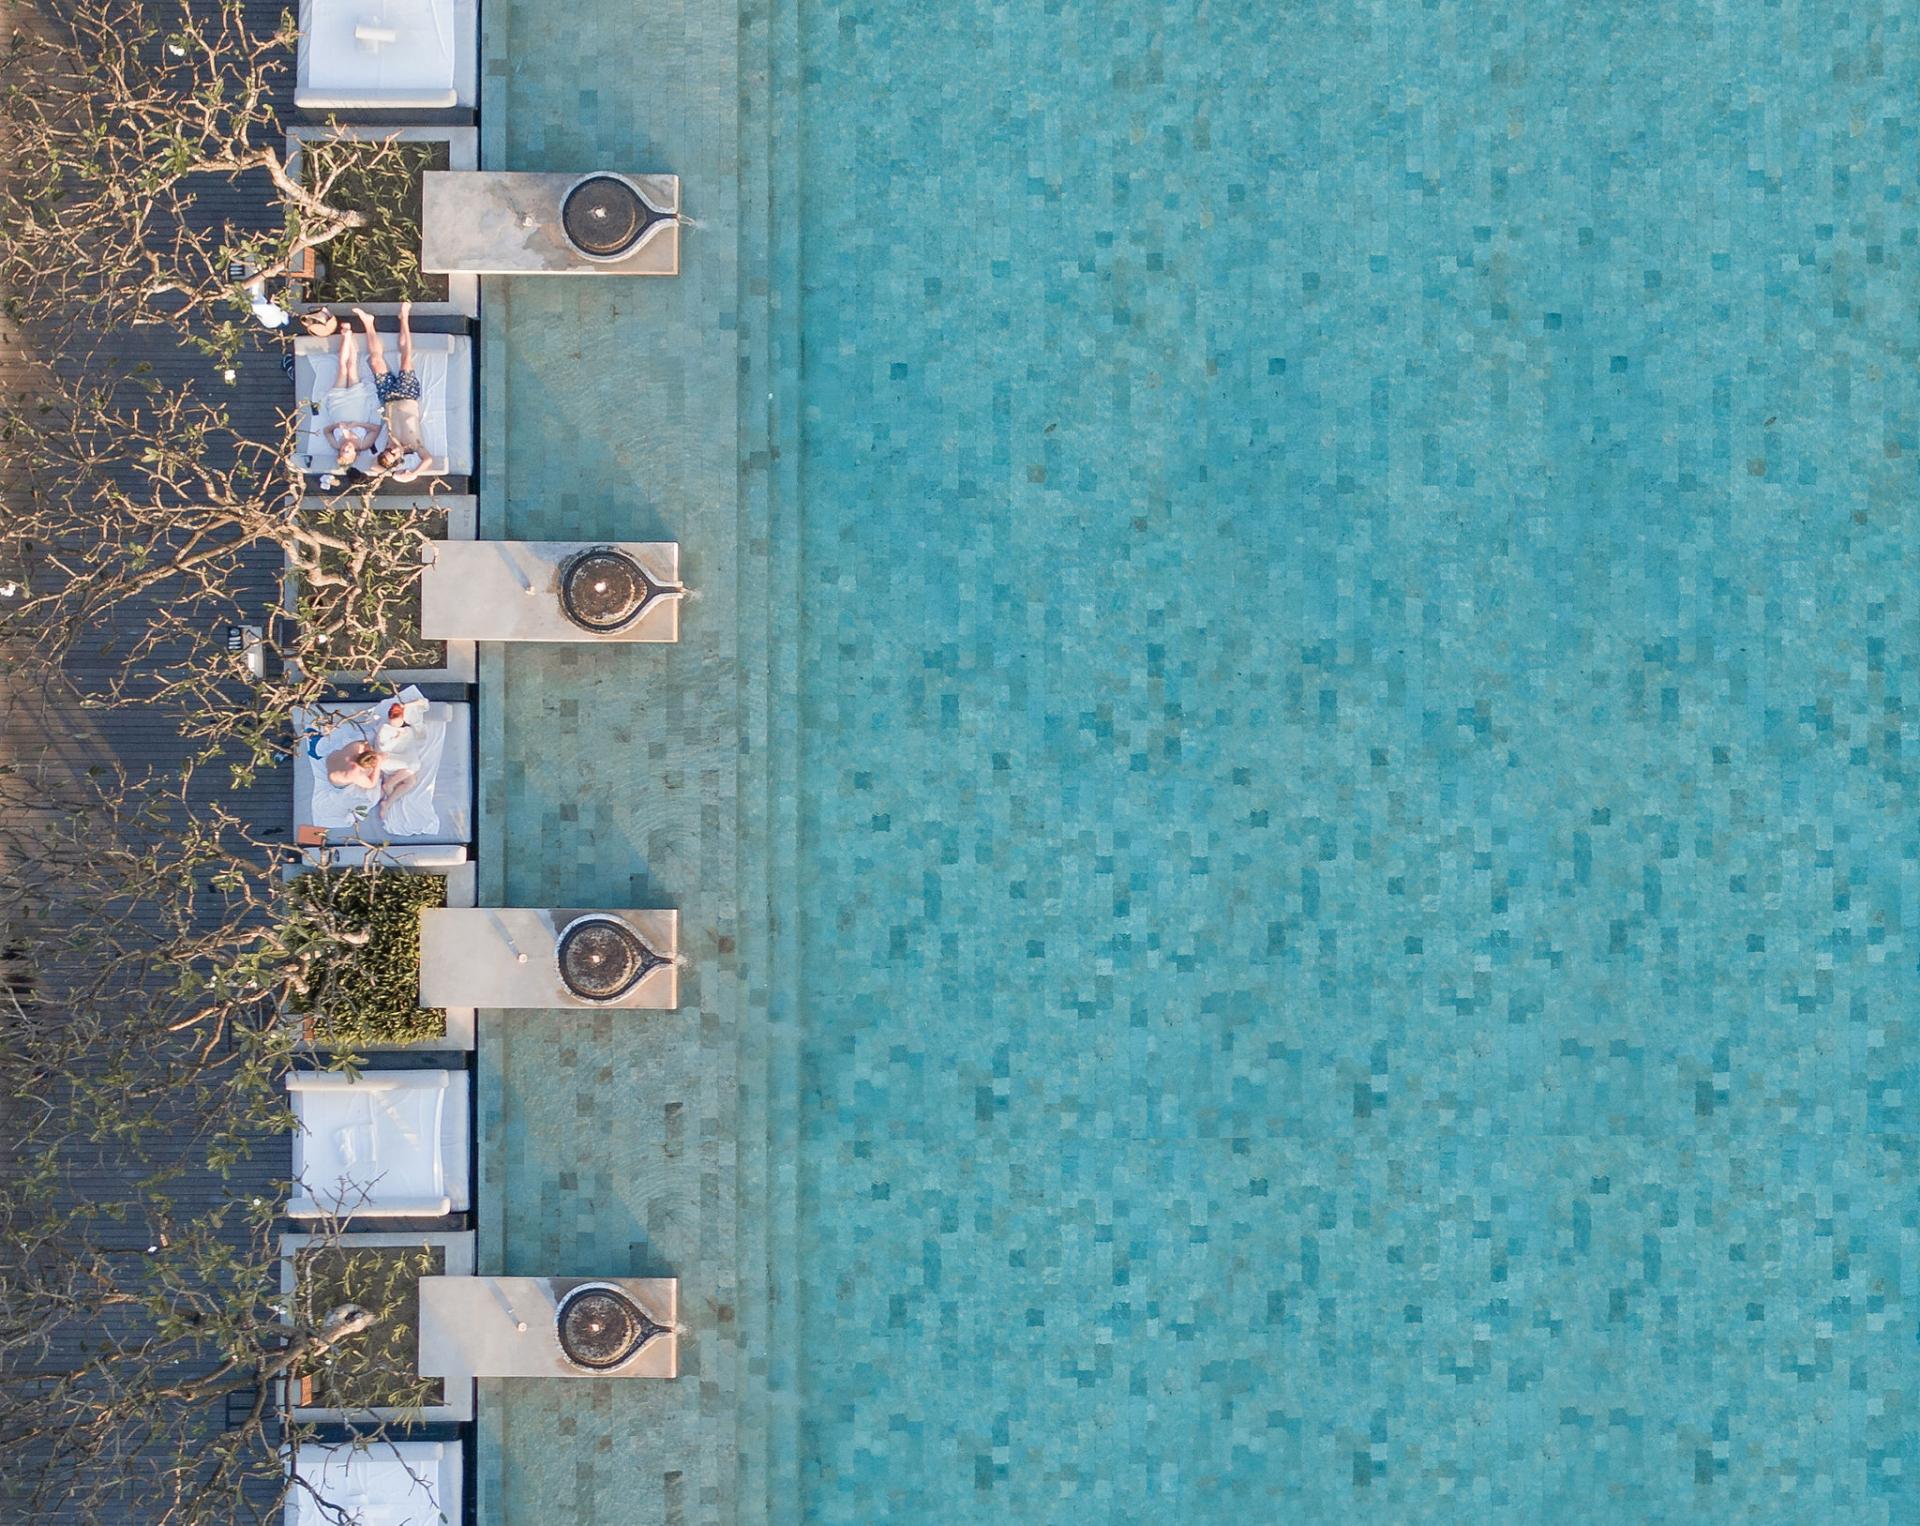 A private pool in Bali